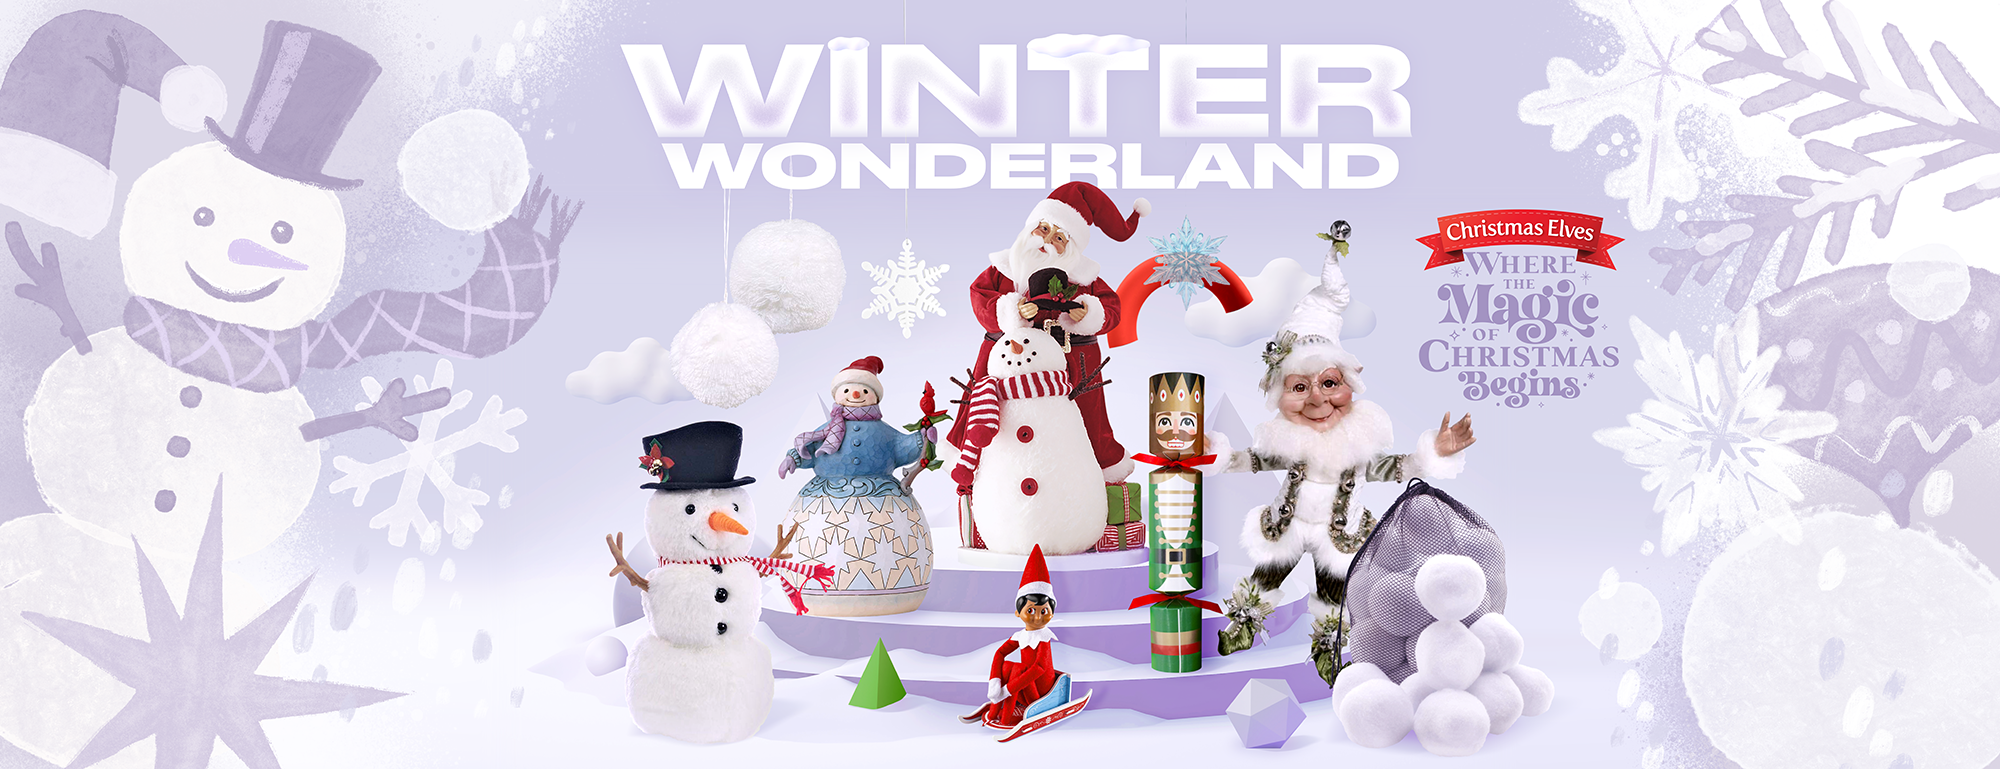 Winter Wonderland - where the magic of Christmas begins